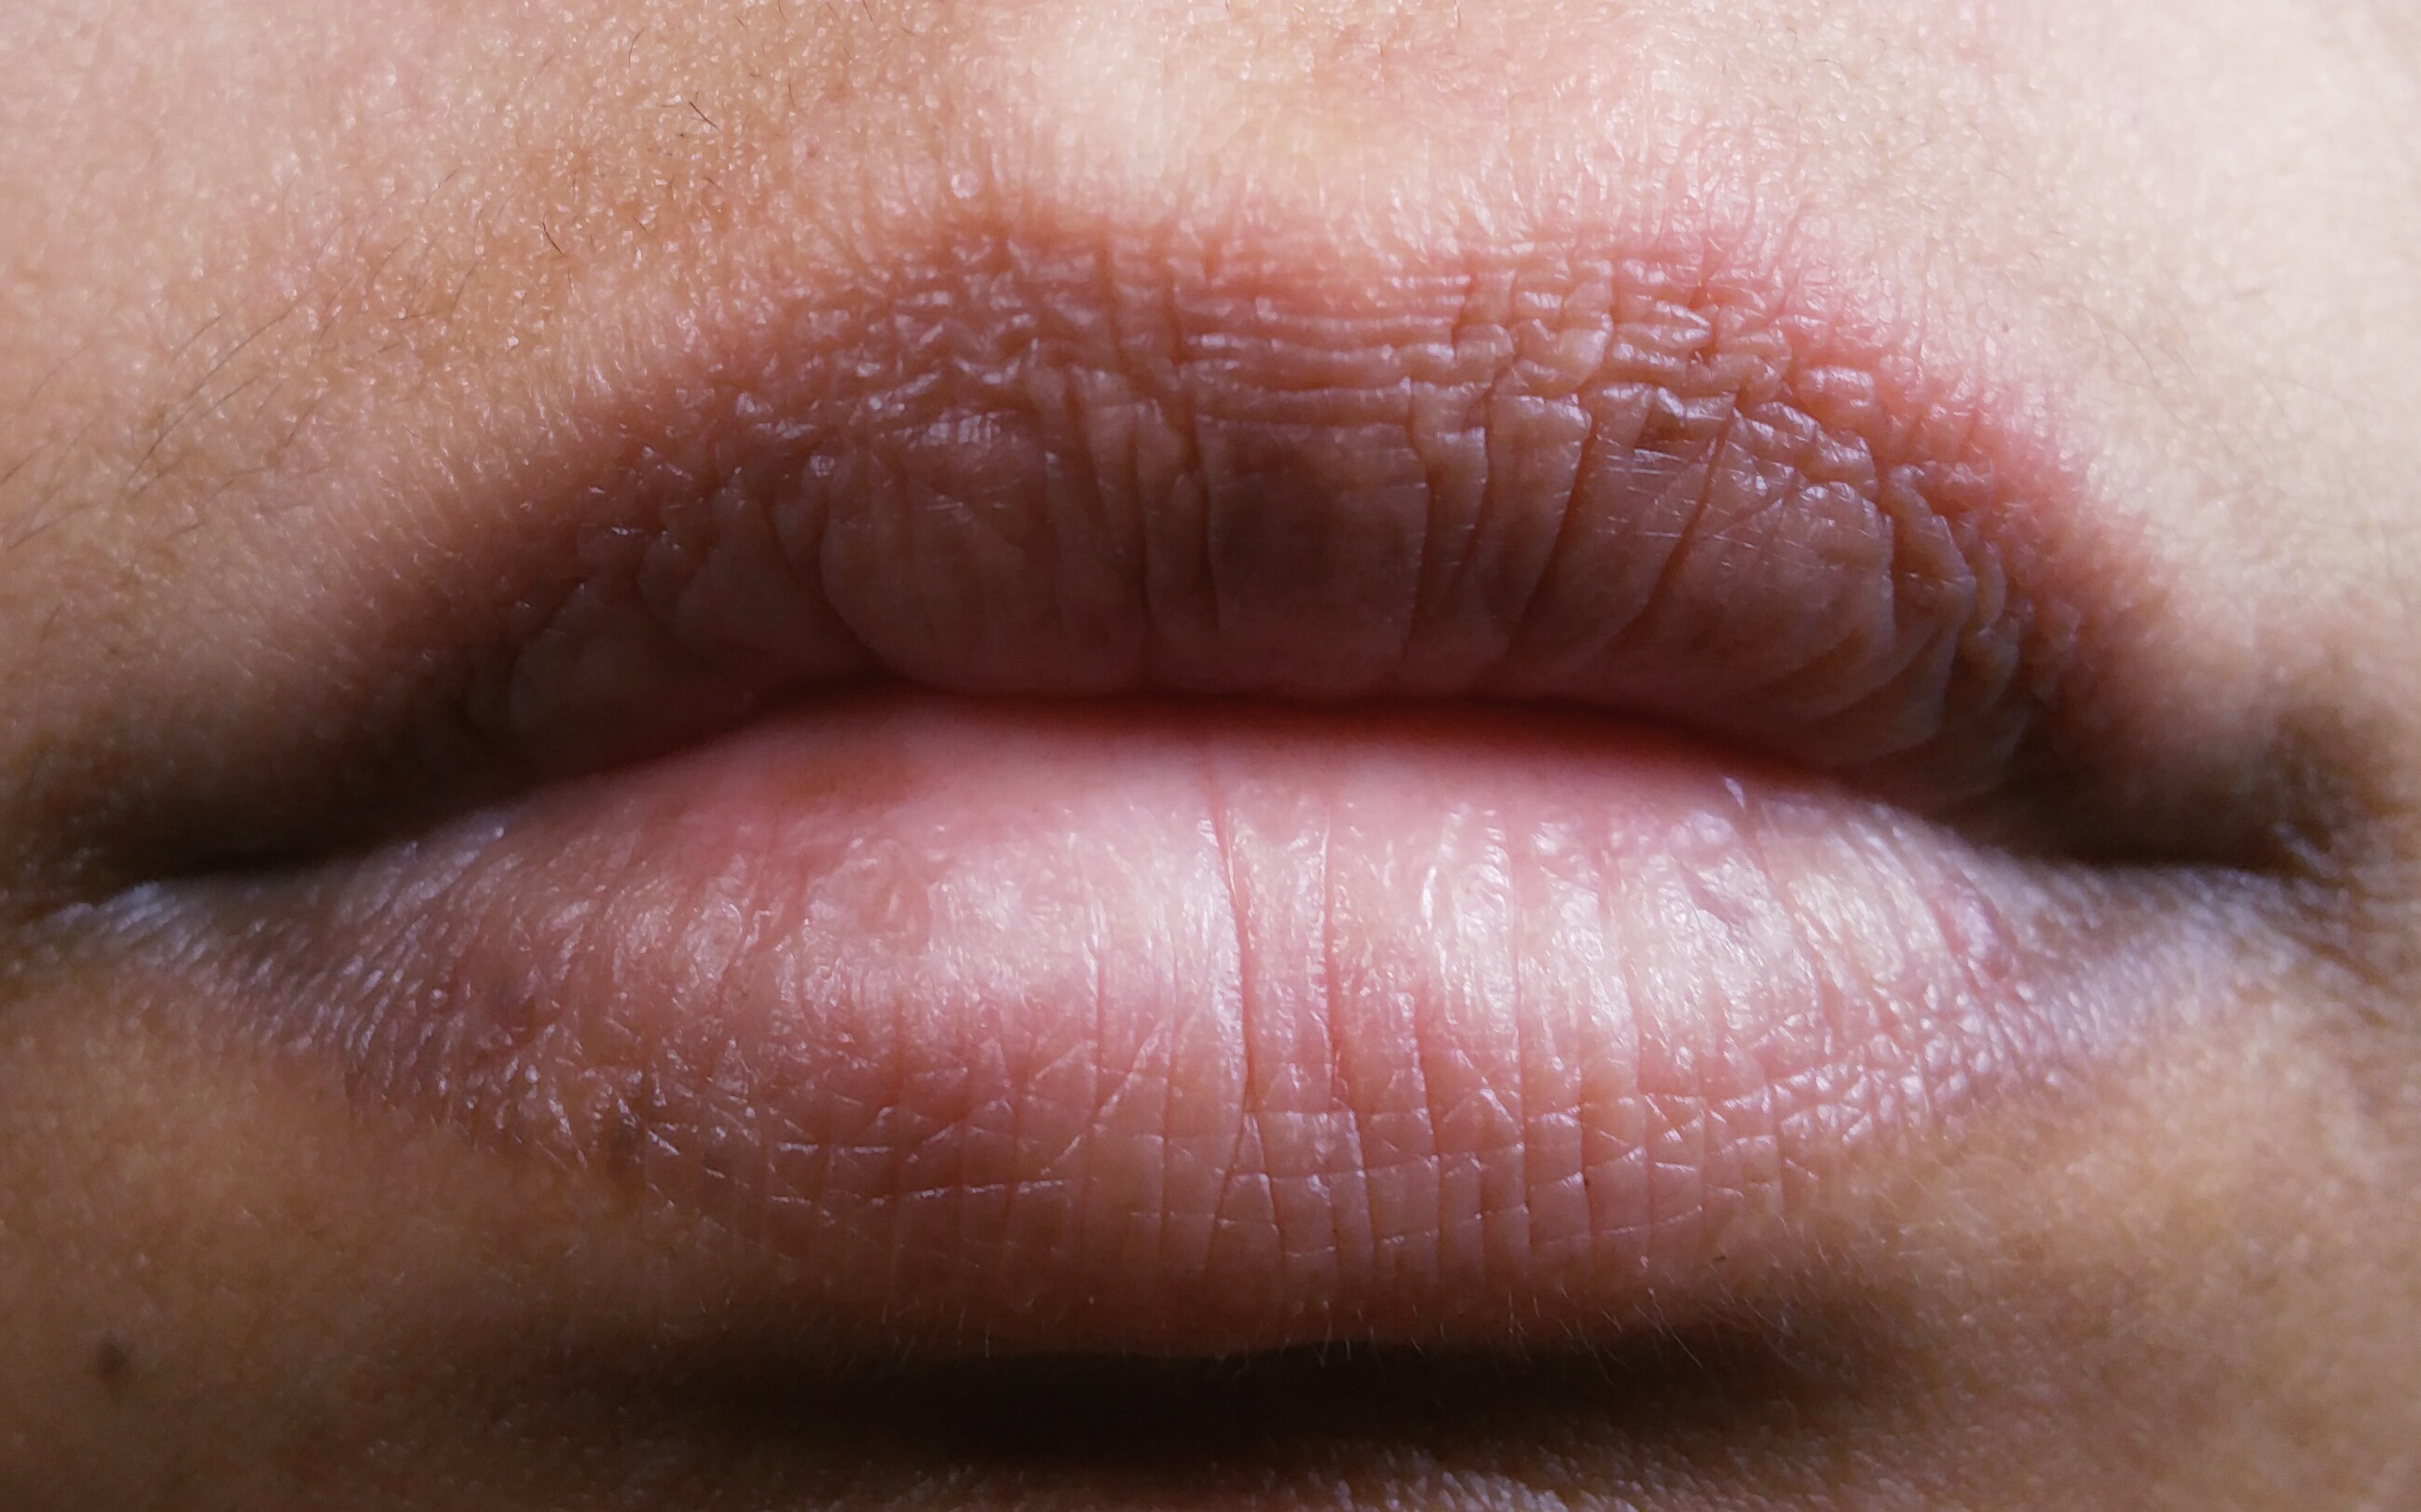 sublime lips, cheeky physique, lip plumper, lip gloss, manuka honey, review, beauty, lips, lip gloss plumper, all natural beauty, 